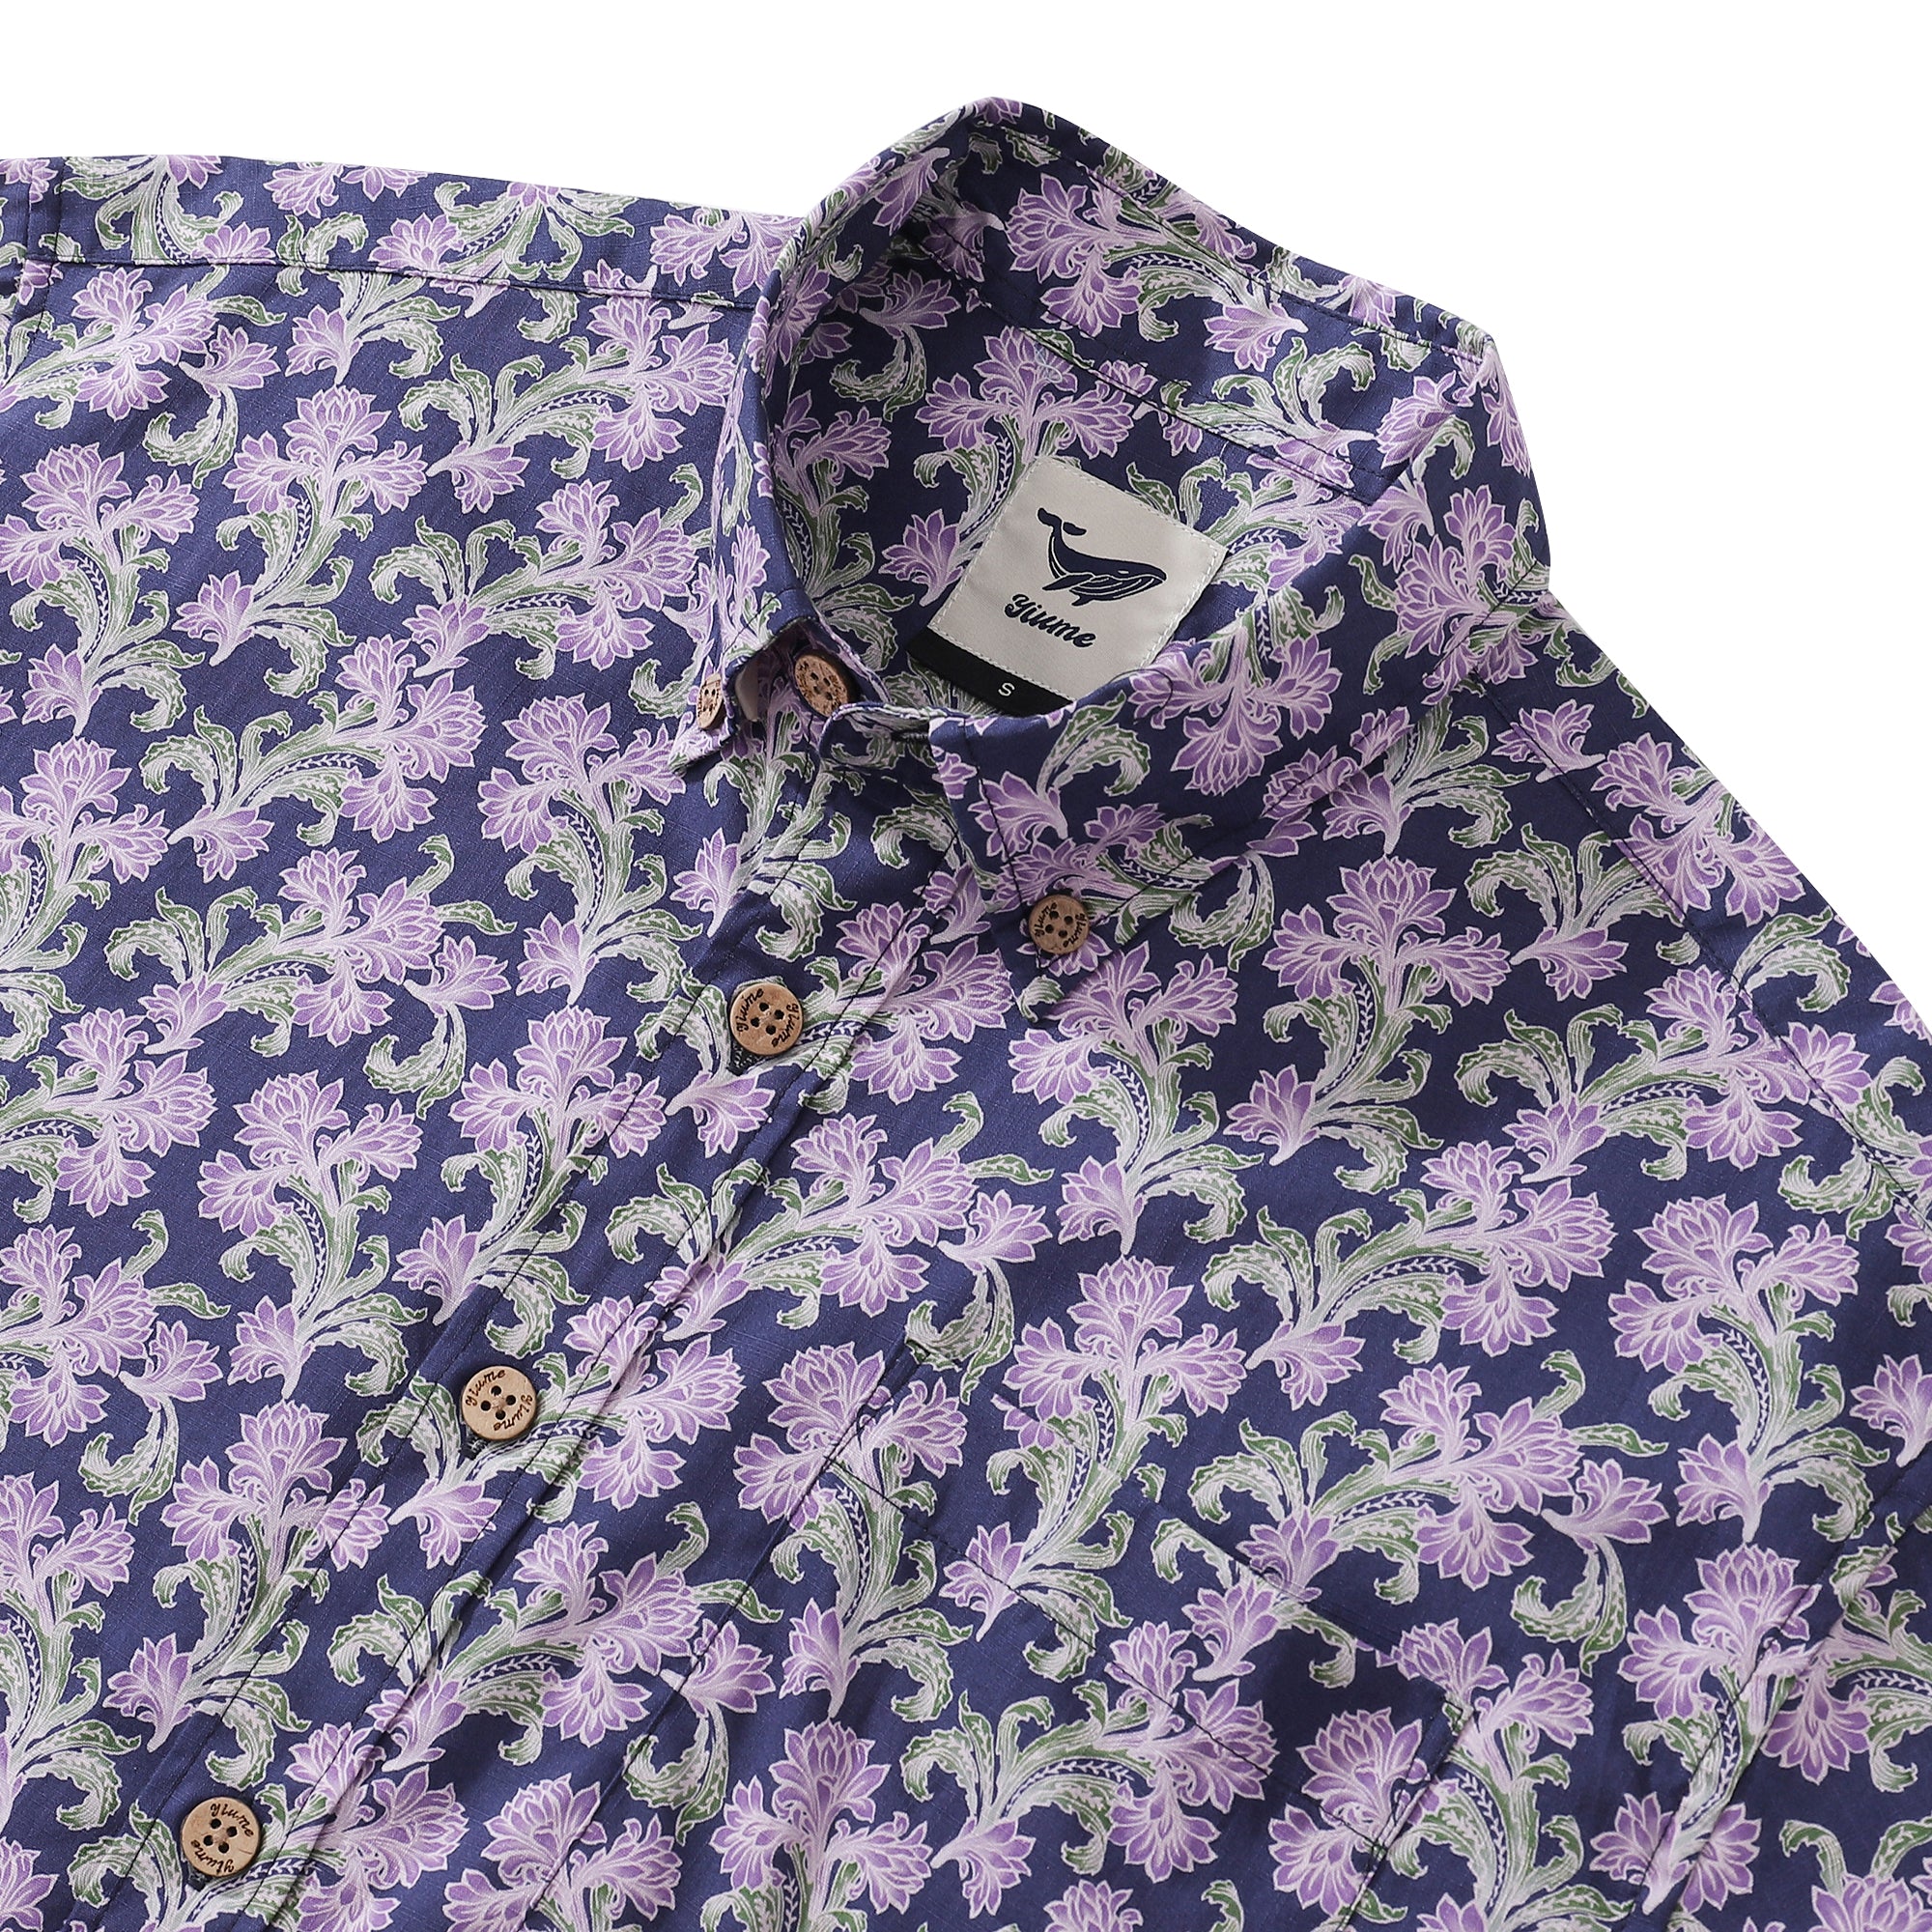 Men's Hawaiian Shirt Button Down Morris Shirt Purple Floral Cotton Aloha Shirt